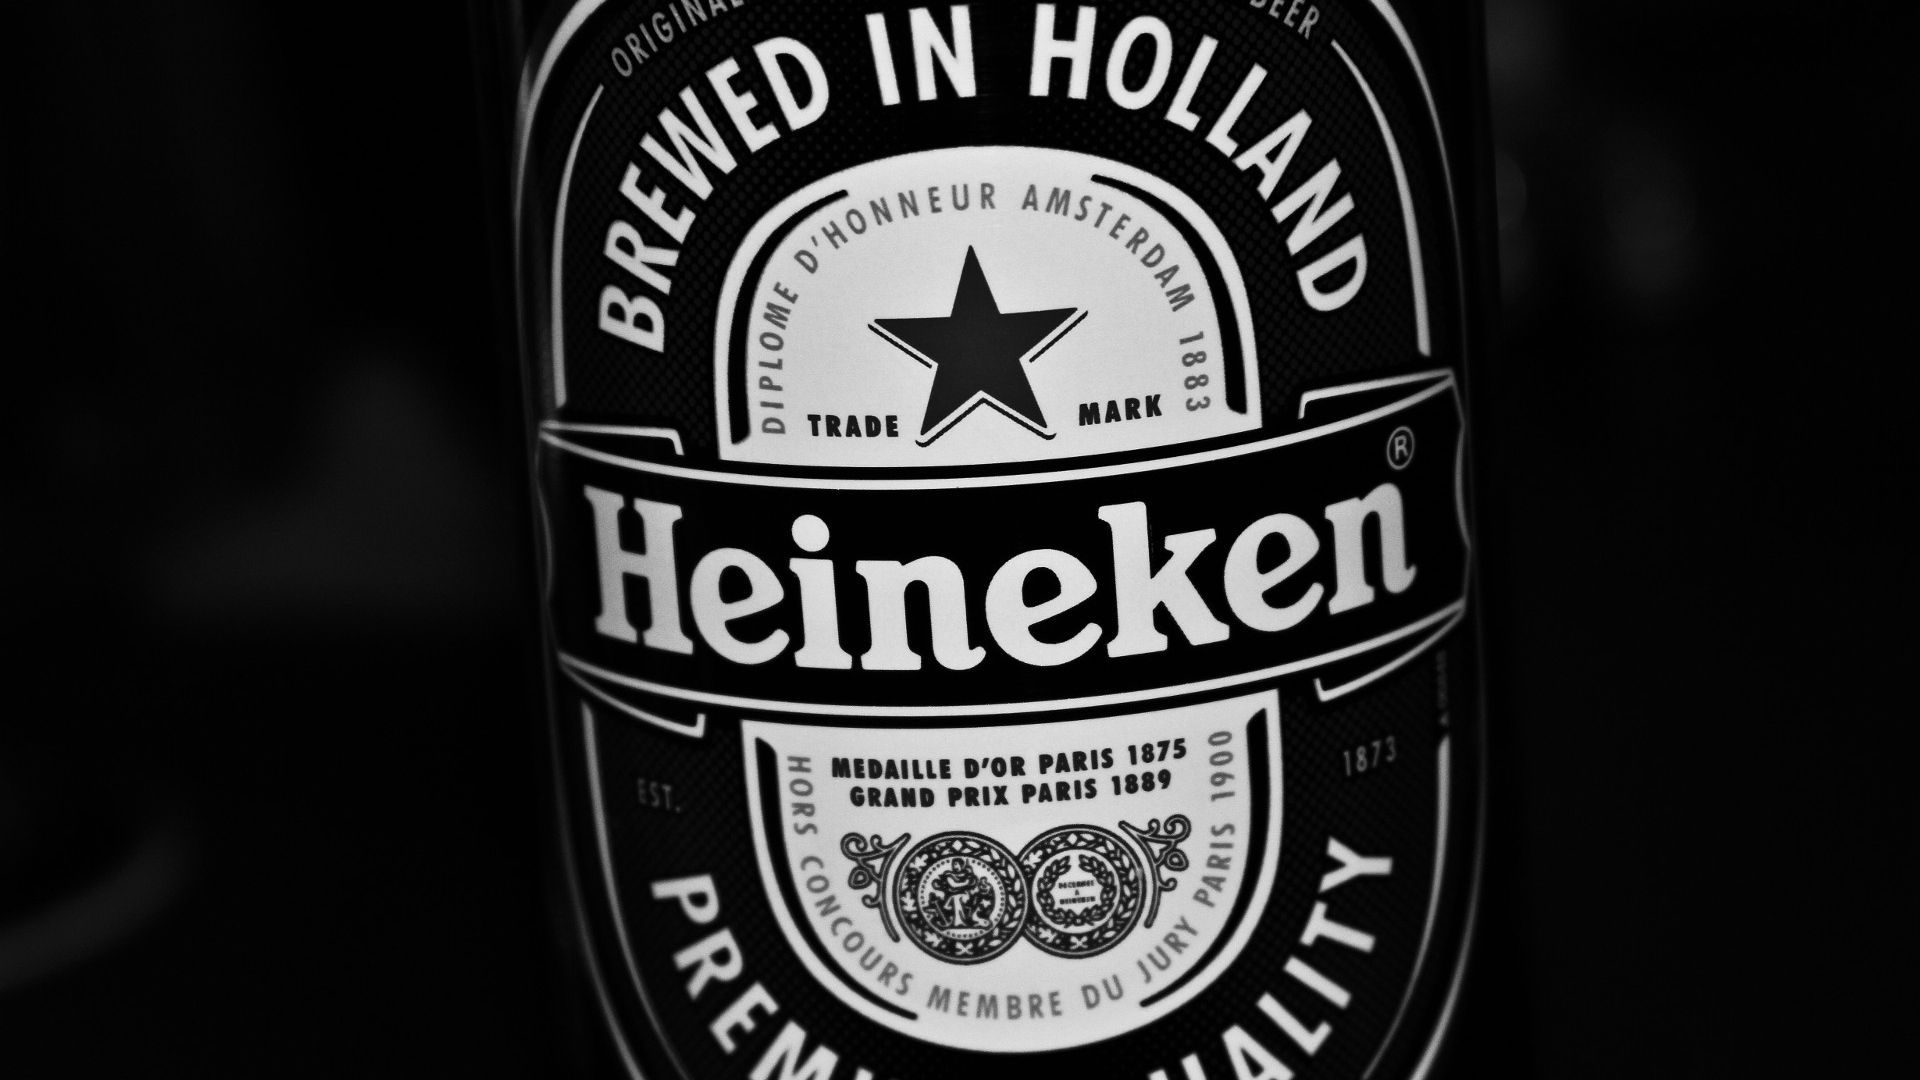 heineken beer bottle brand alcohol HD wallpaper. Heineken, Heineken beer, Heineken beer bottle